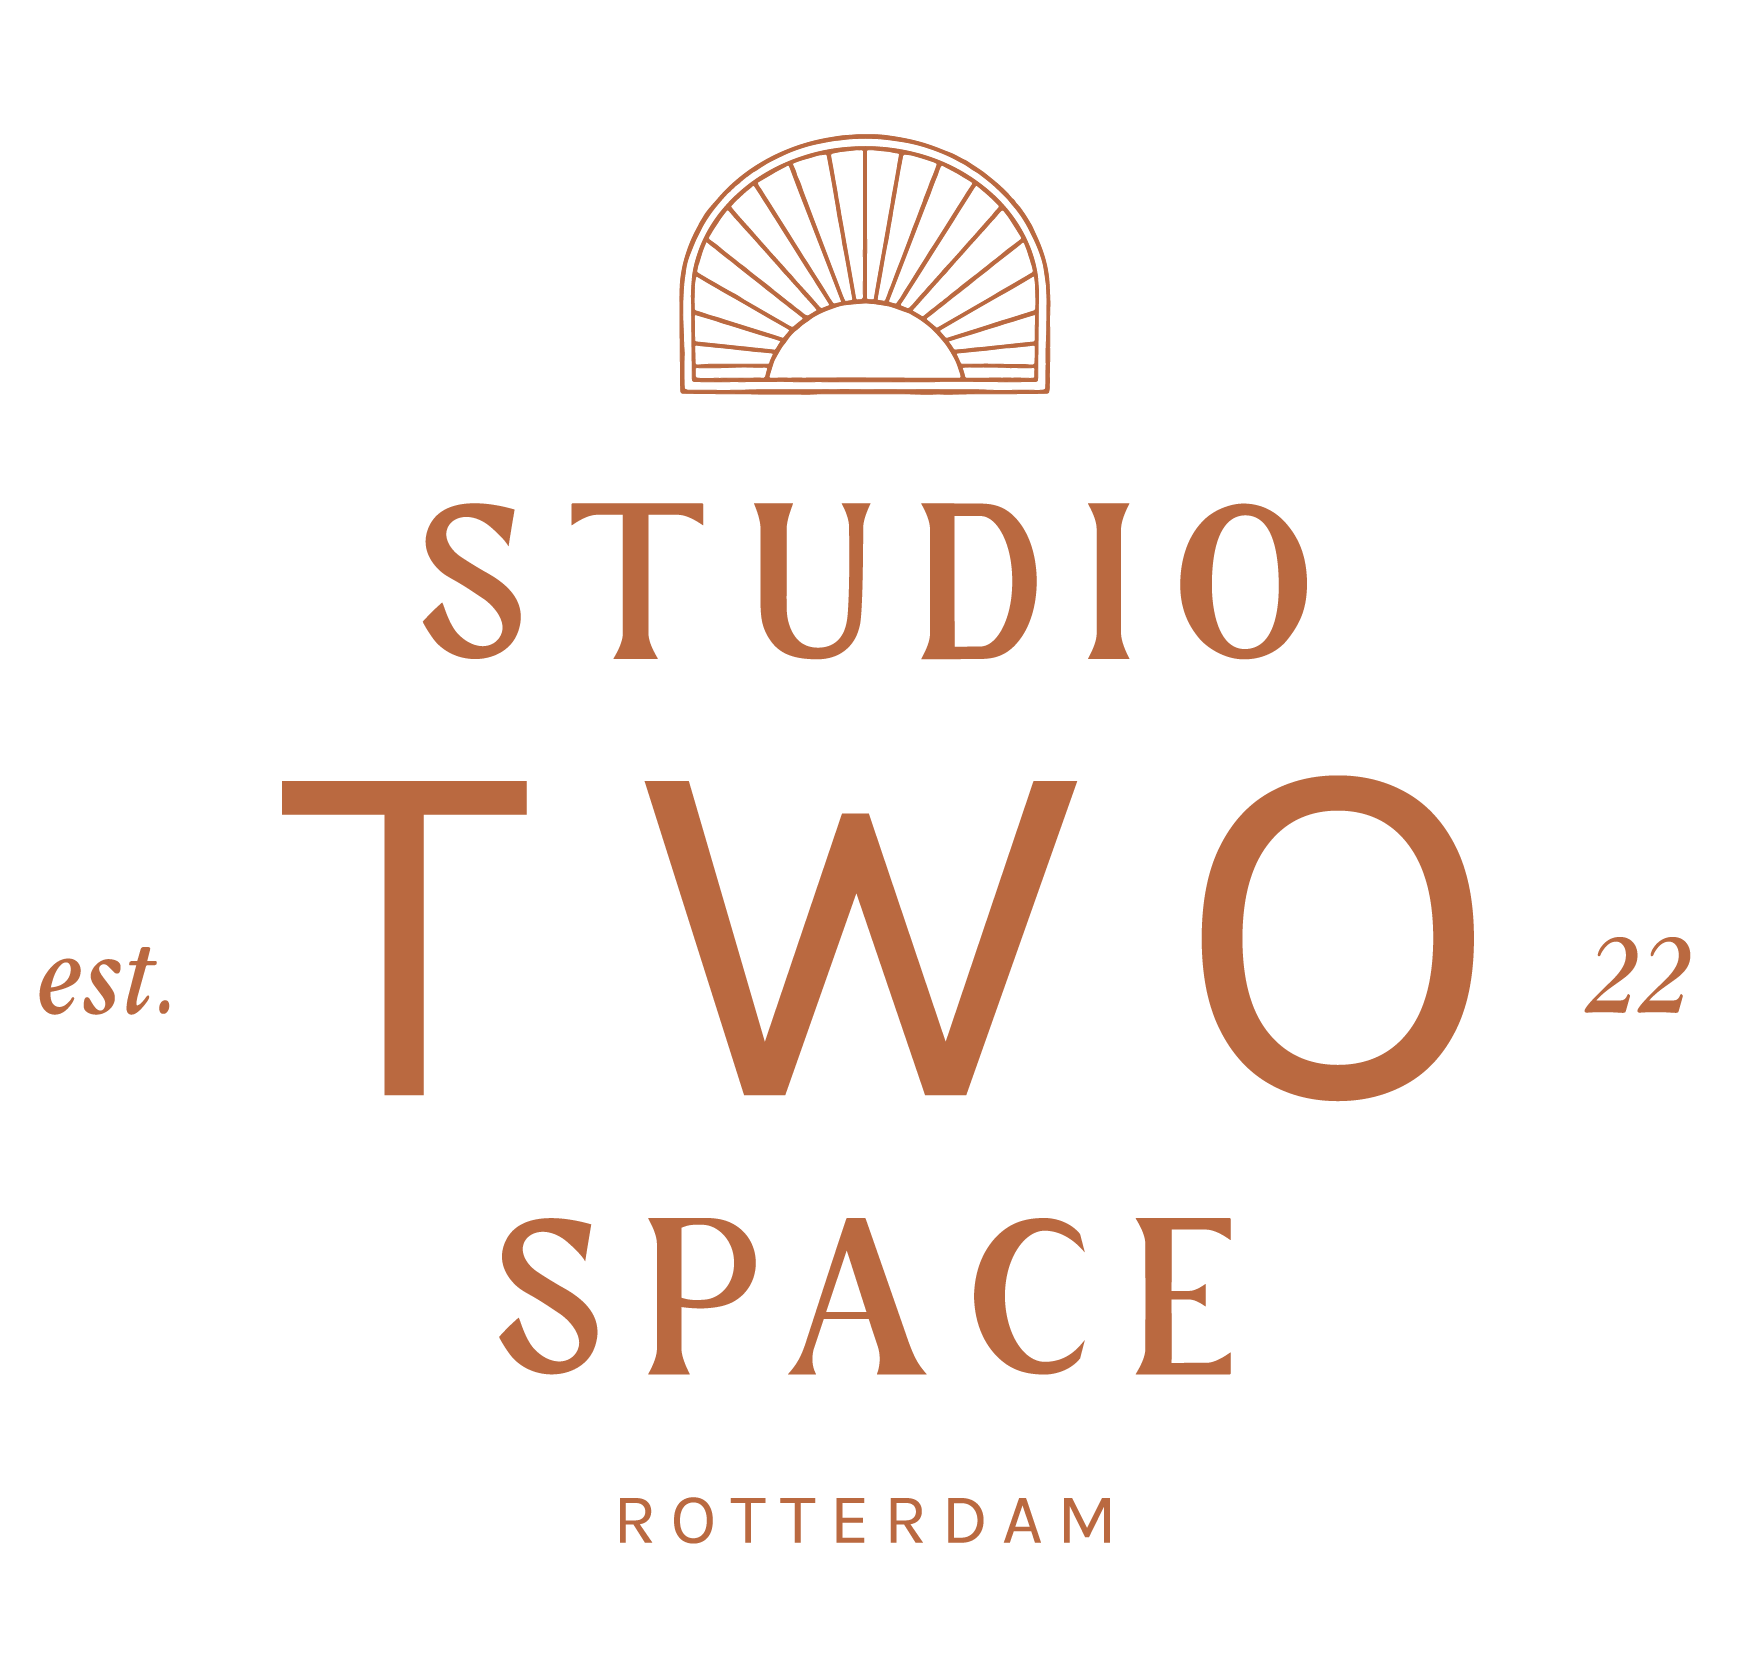 Studio Two Space